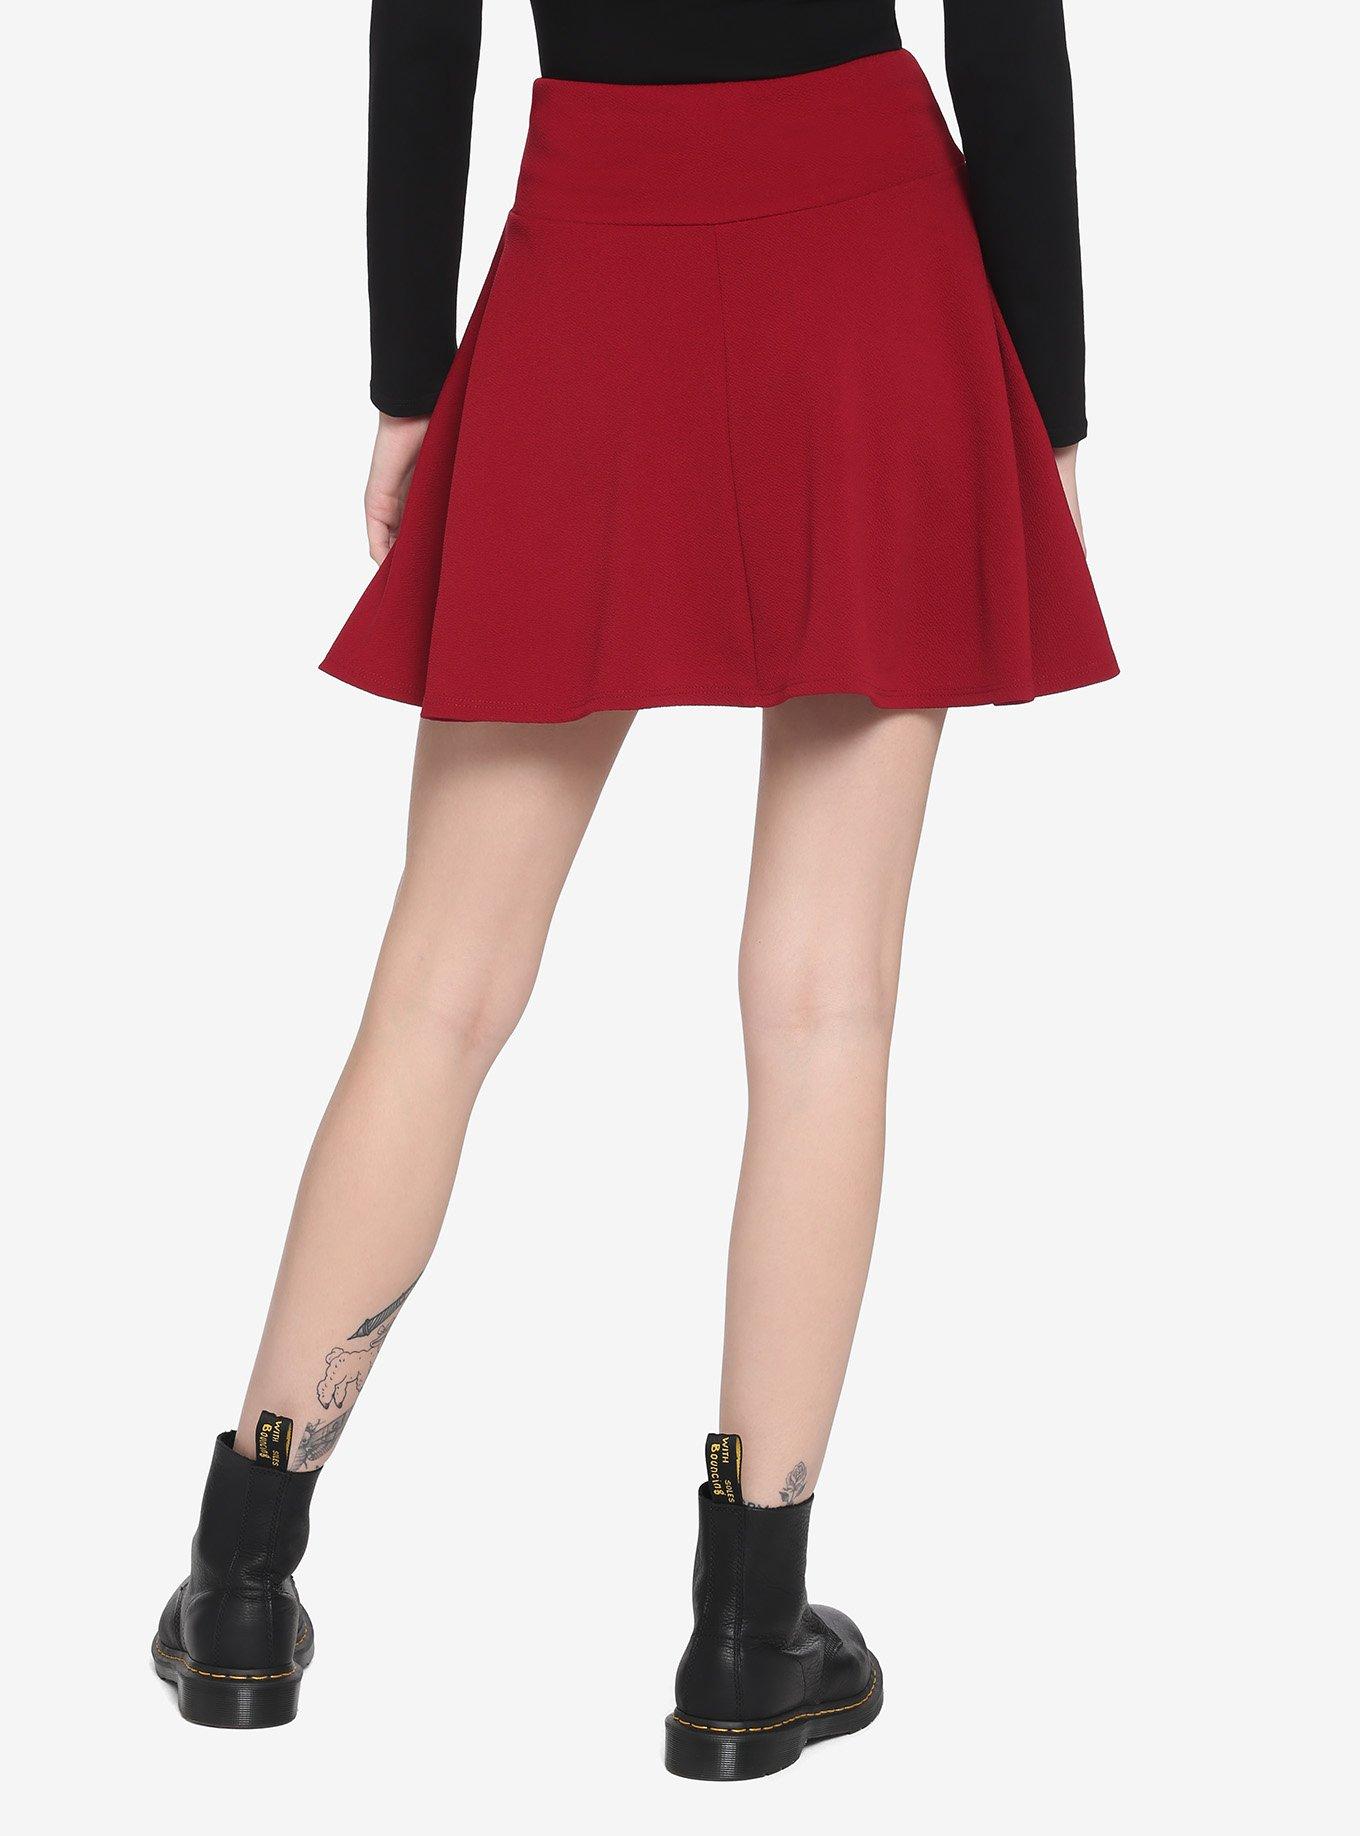 Red & Black Lace-Up Skirt, BURGUNDY, alternate